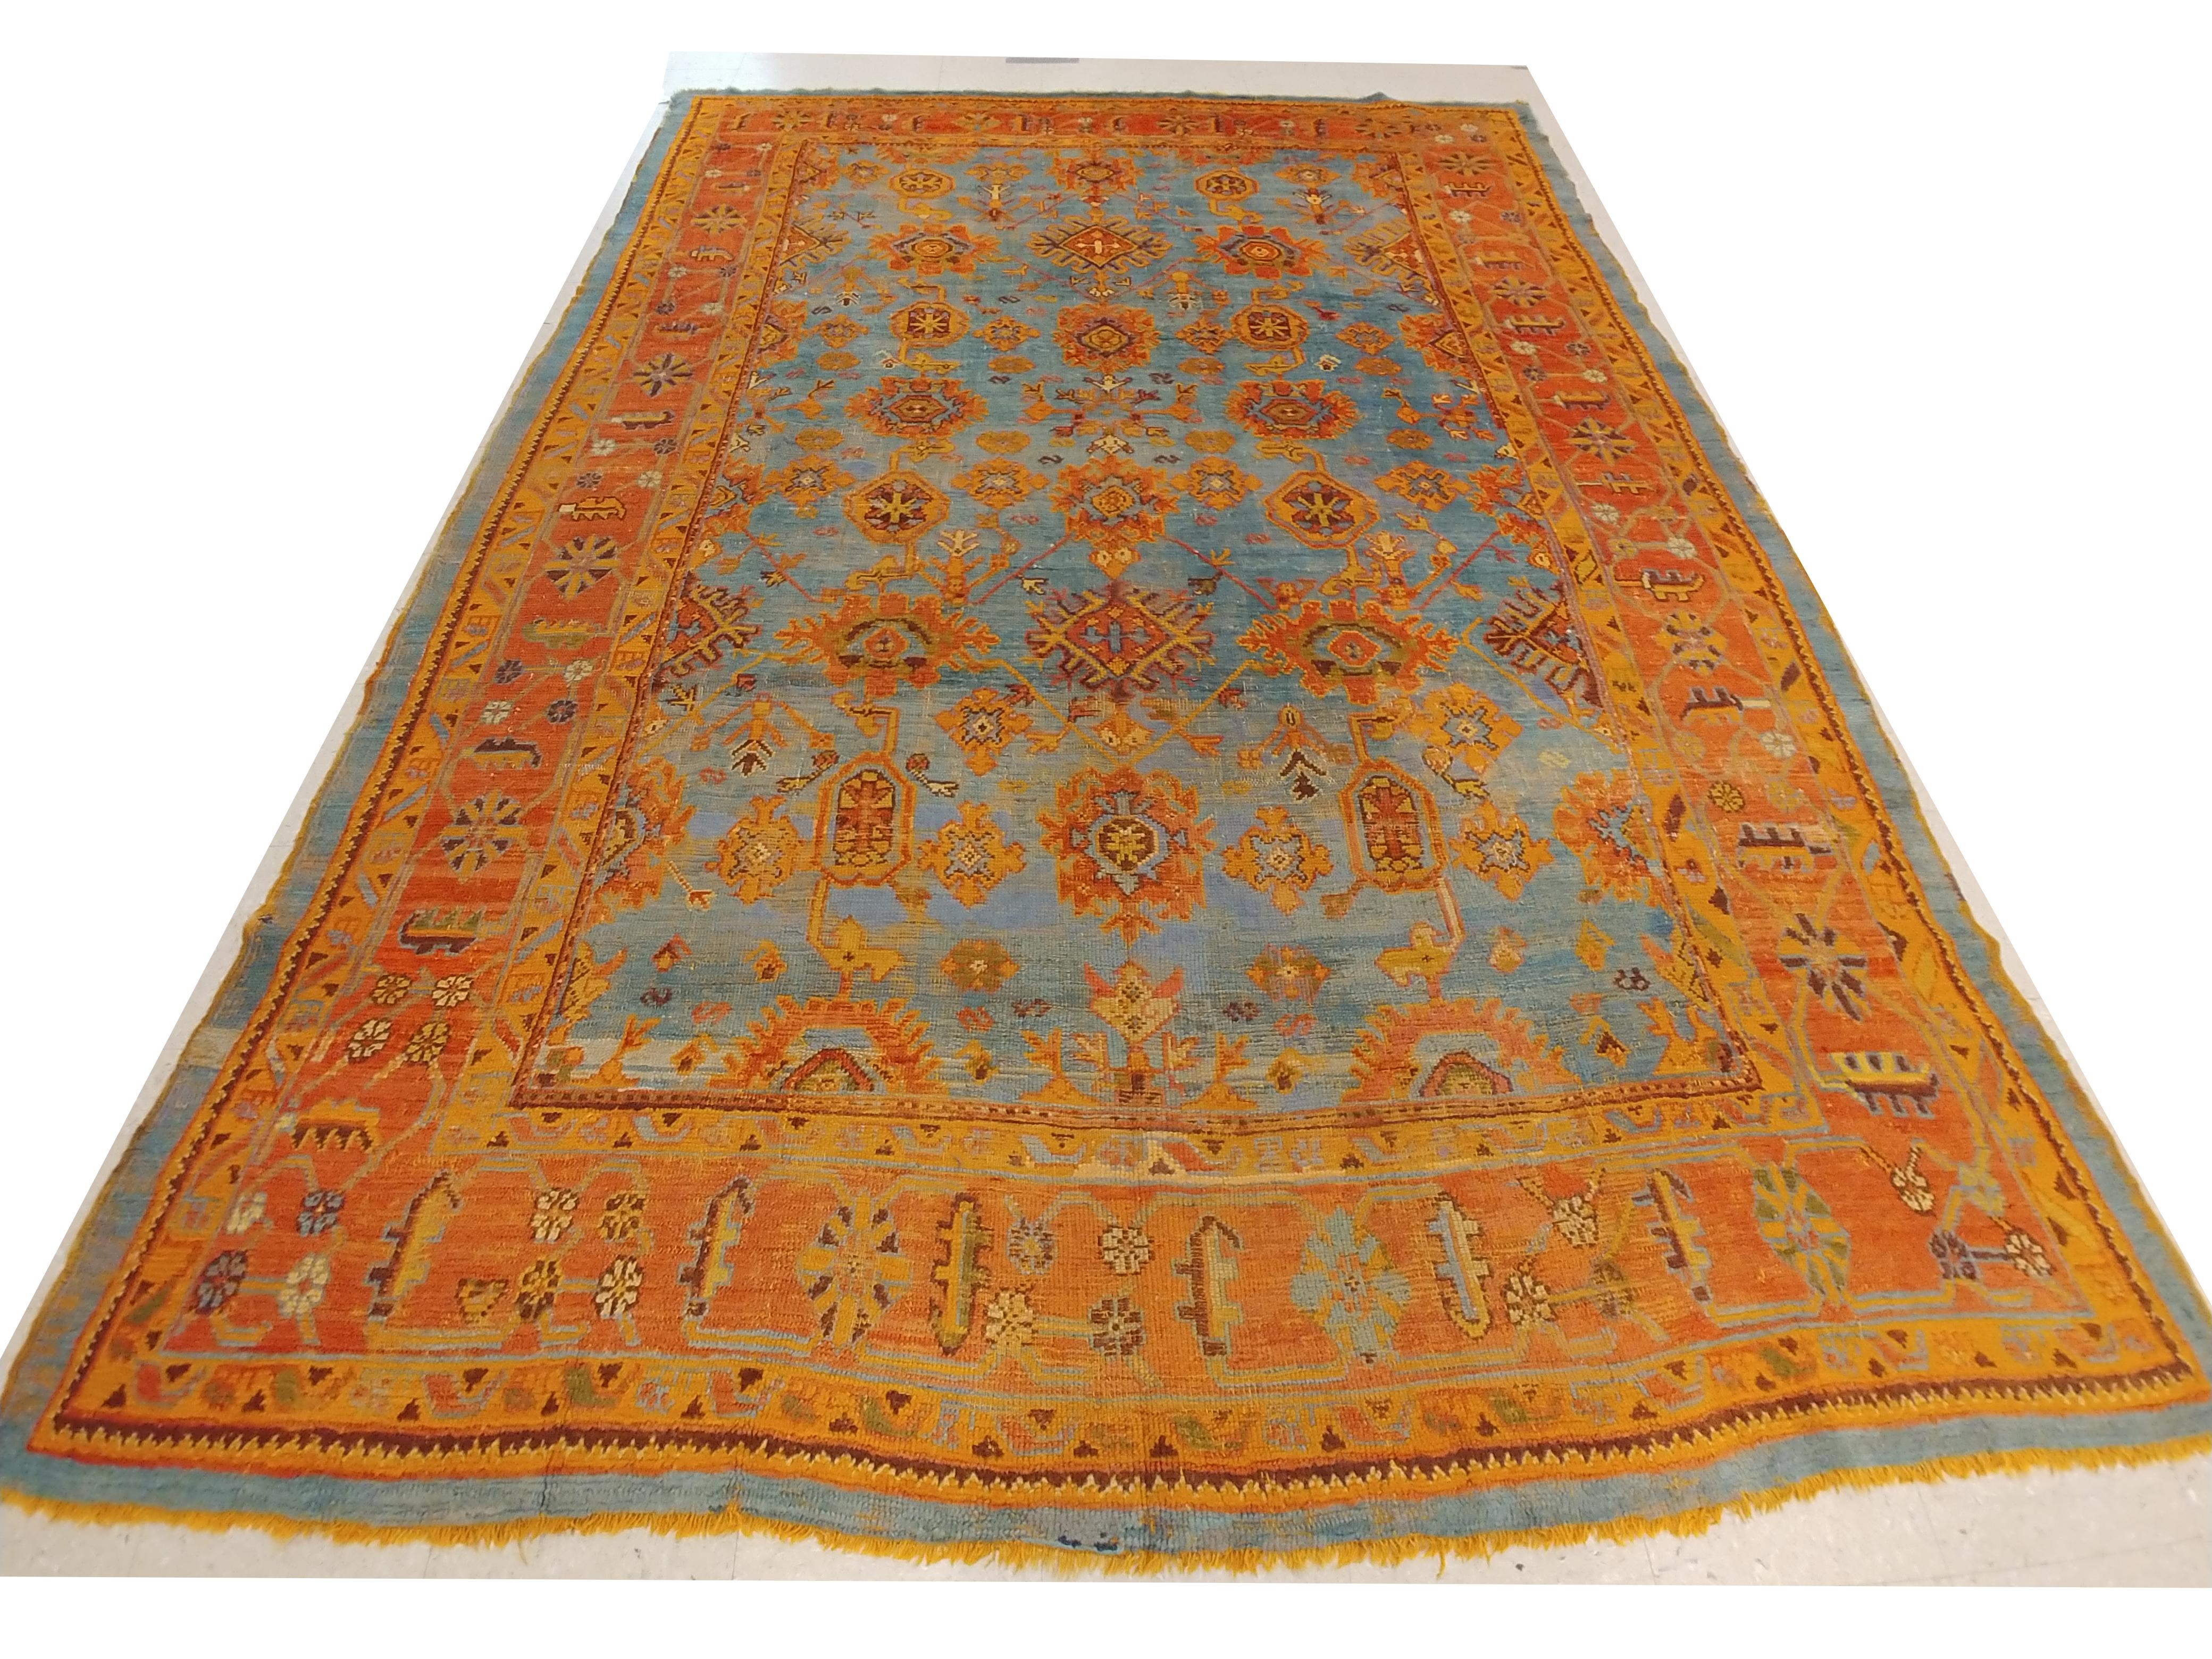 Antique Oushak Carpet, Handmade Oriental Rug Made in Turkey, Coral, Light Blue 1